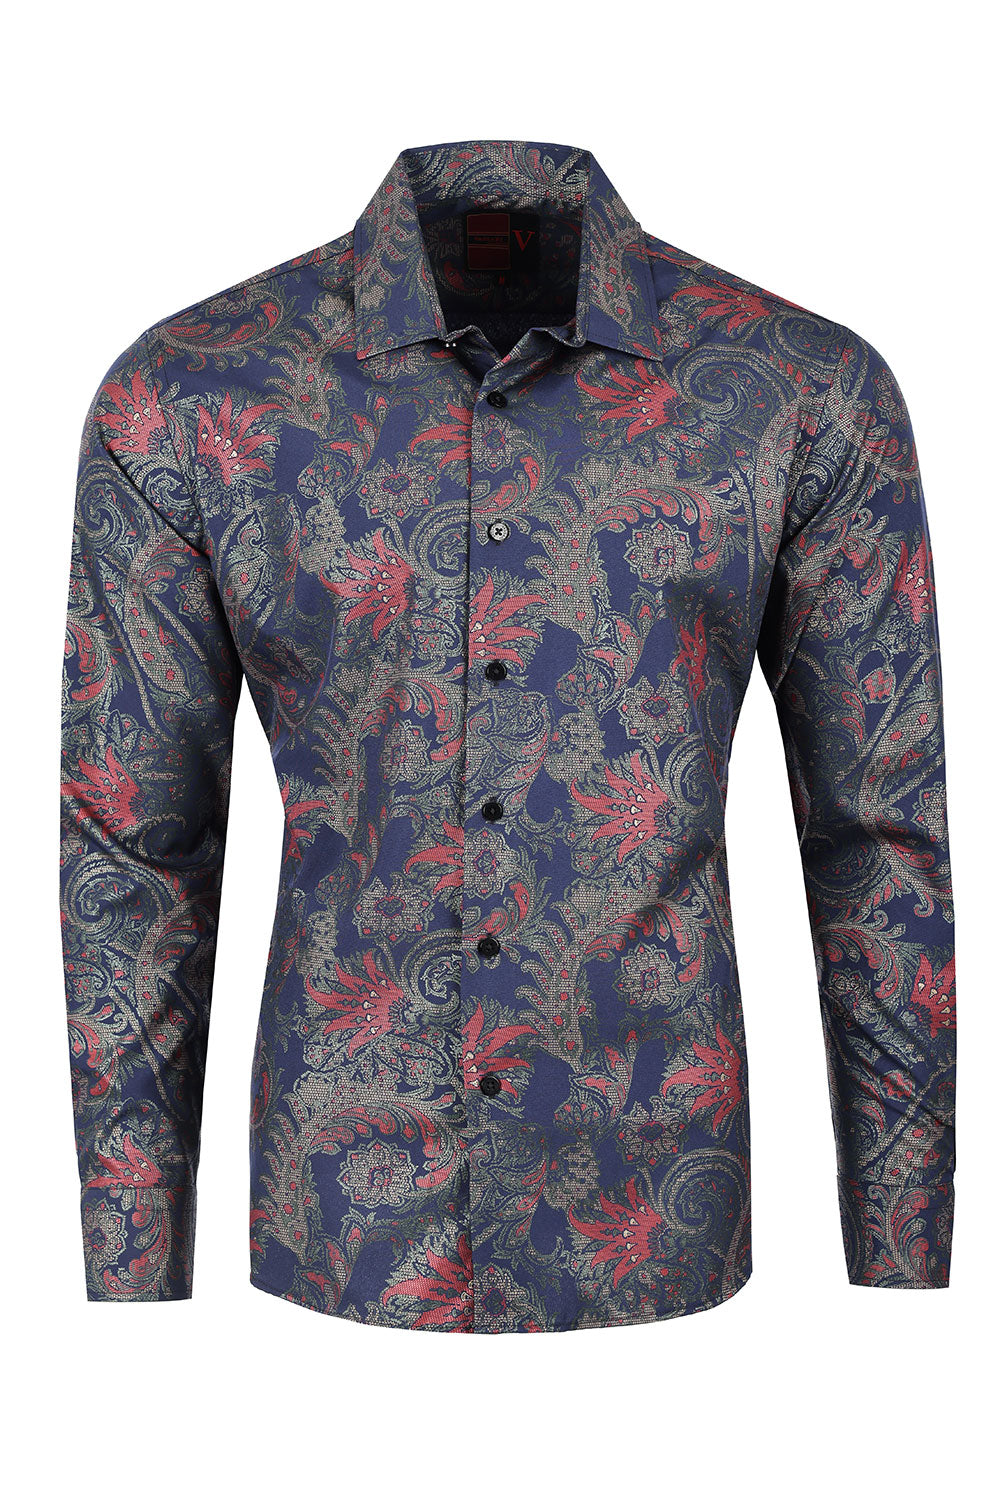 BARABAS Men's Floral Long Sleeve Button Down Shirt 2VS176 Navy